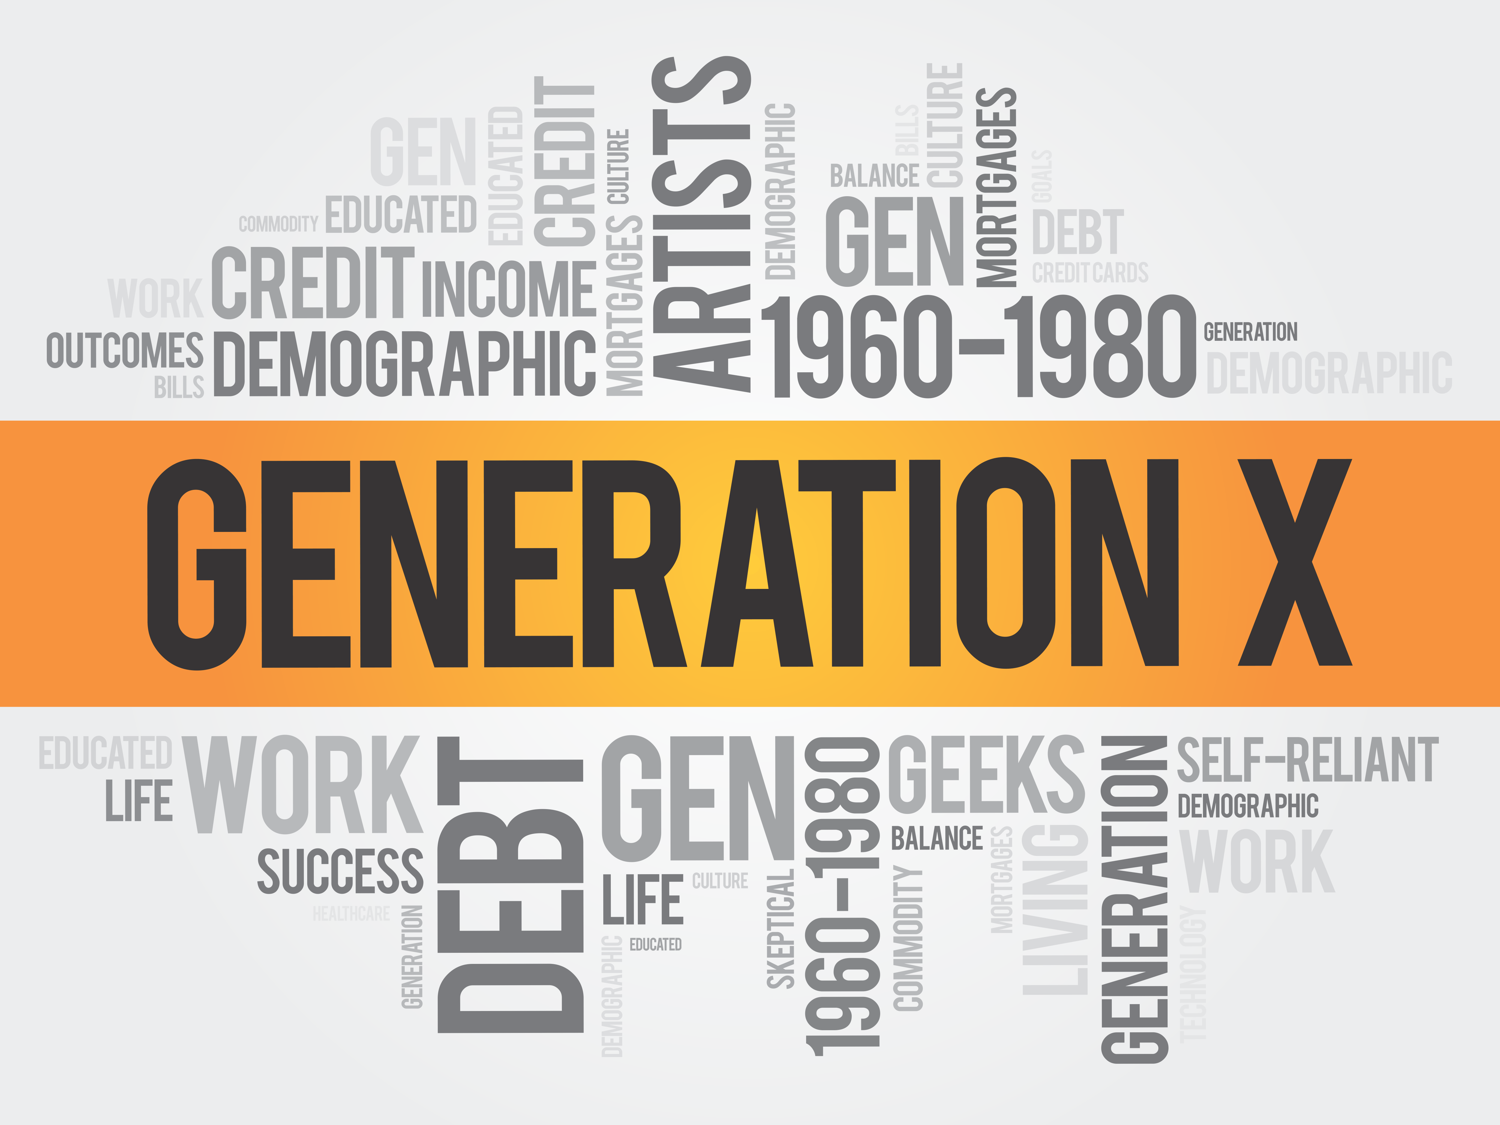 Is Generation X Preparing Adequately for Retirement